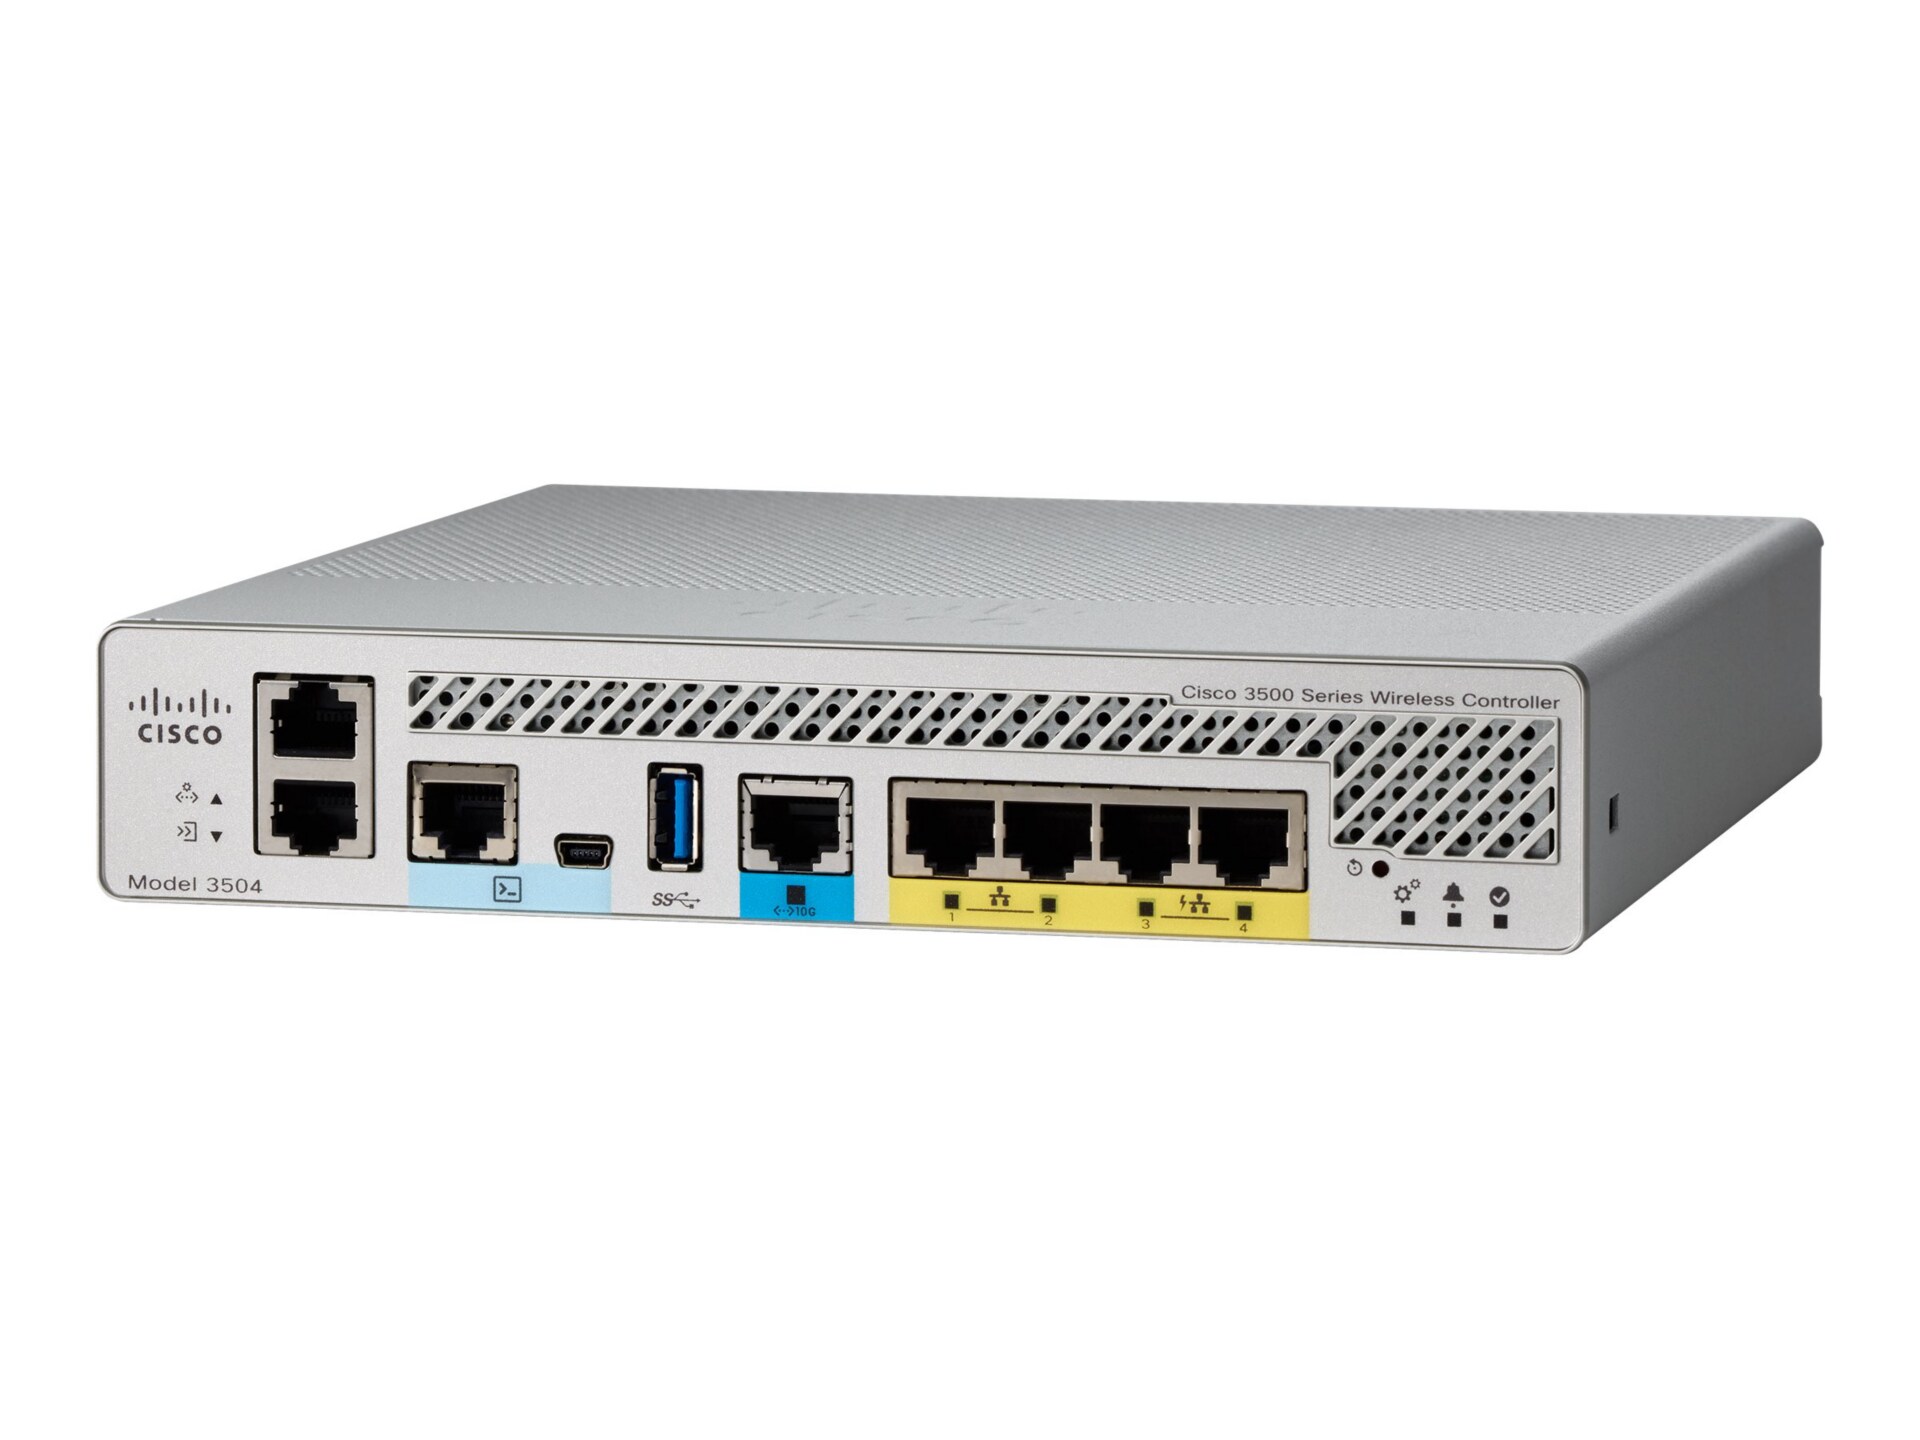 Cisco Wireless Controller 3504 - network management device - EDU-CT3504 ...